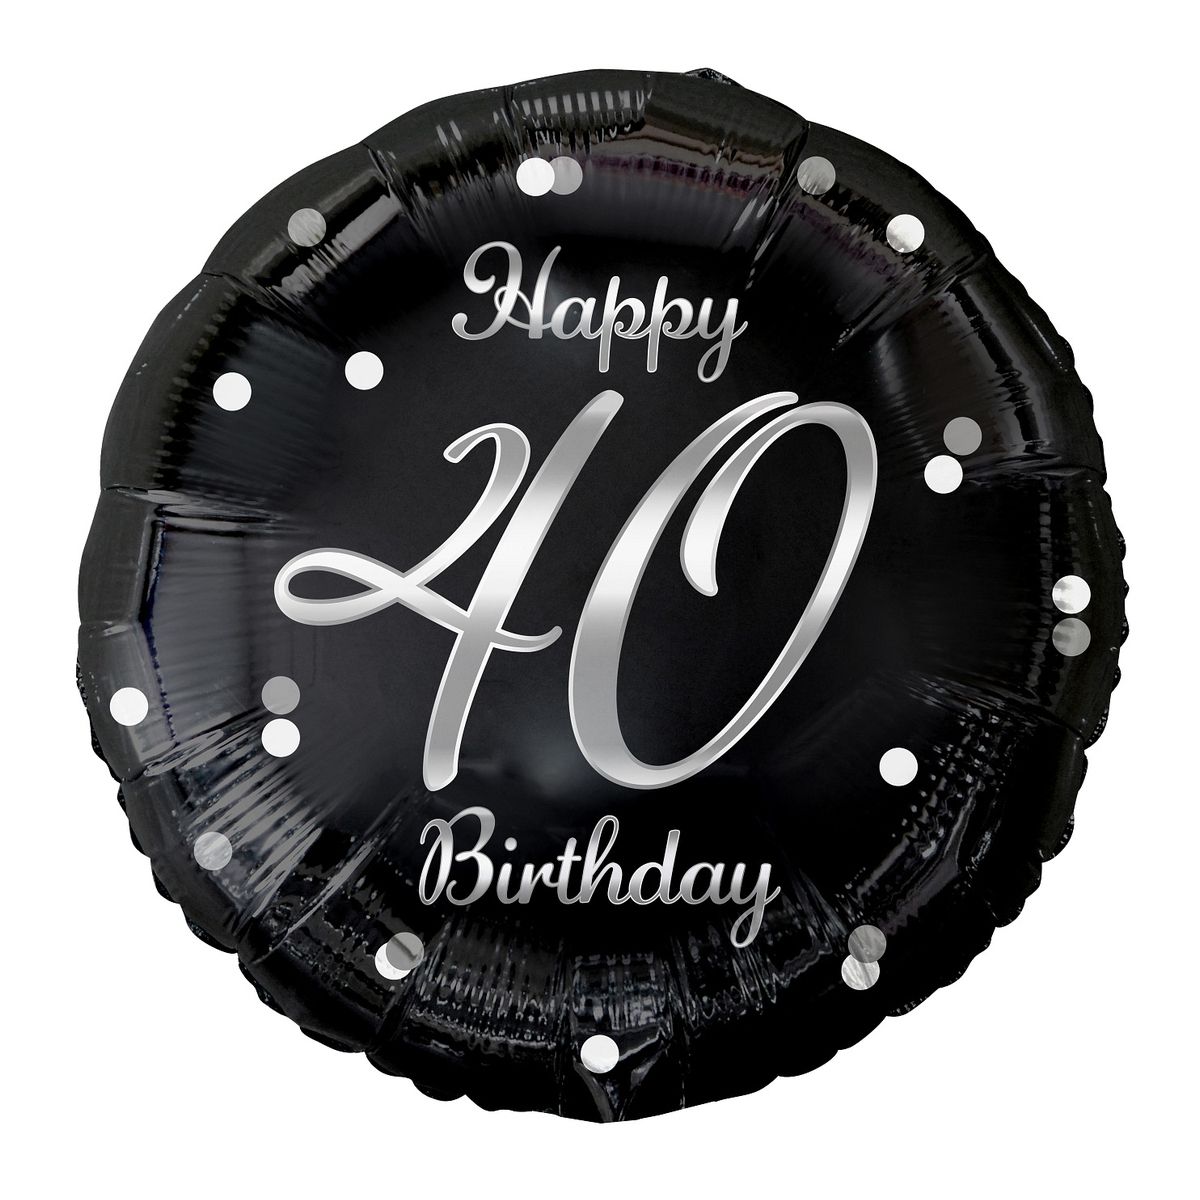 Balon foliowy Godan Happy 40 Birthday, czarny, nadruk srebrny 18cal (FG-O40C)